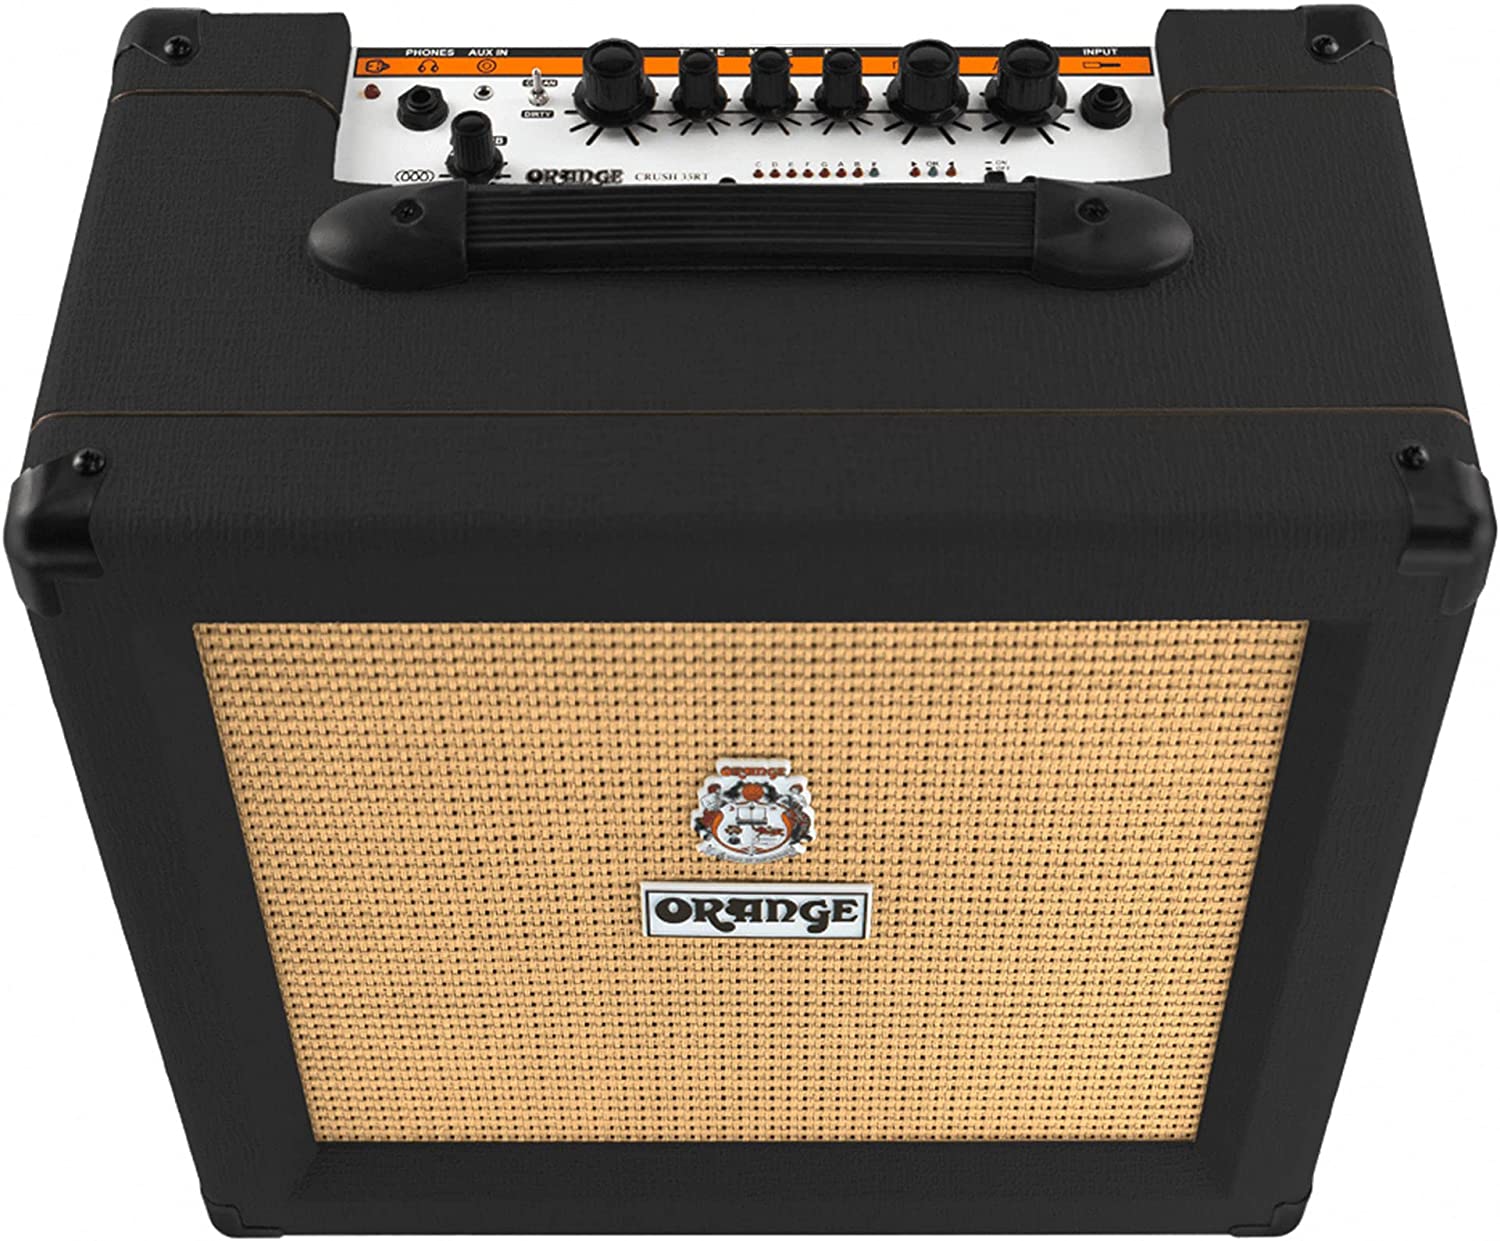 Orange Amplifiers Crush 35RT 35W 1x10 Guitar Combo Amp - Black